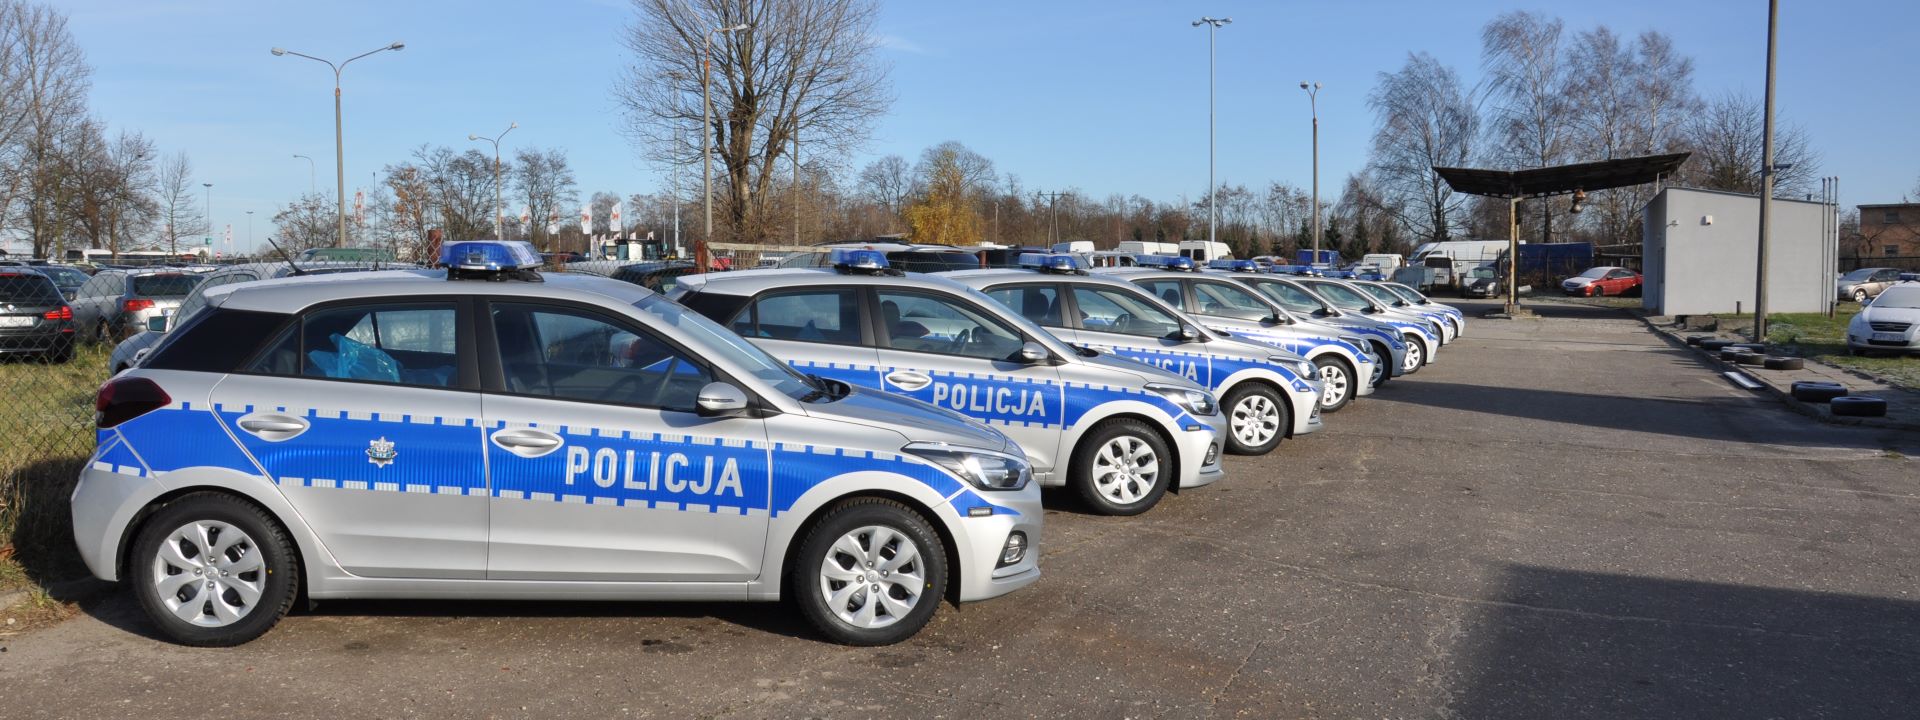 Policja w Hyundaiach